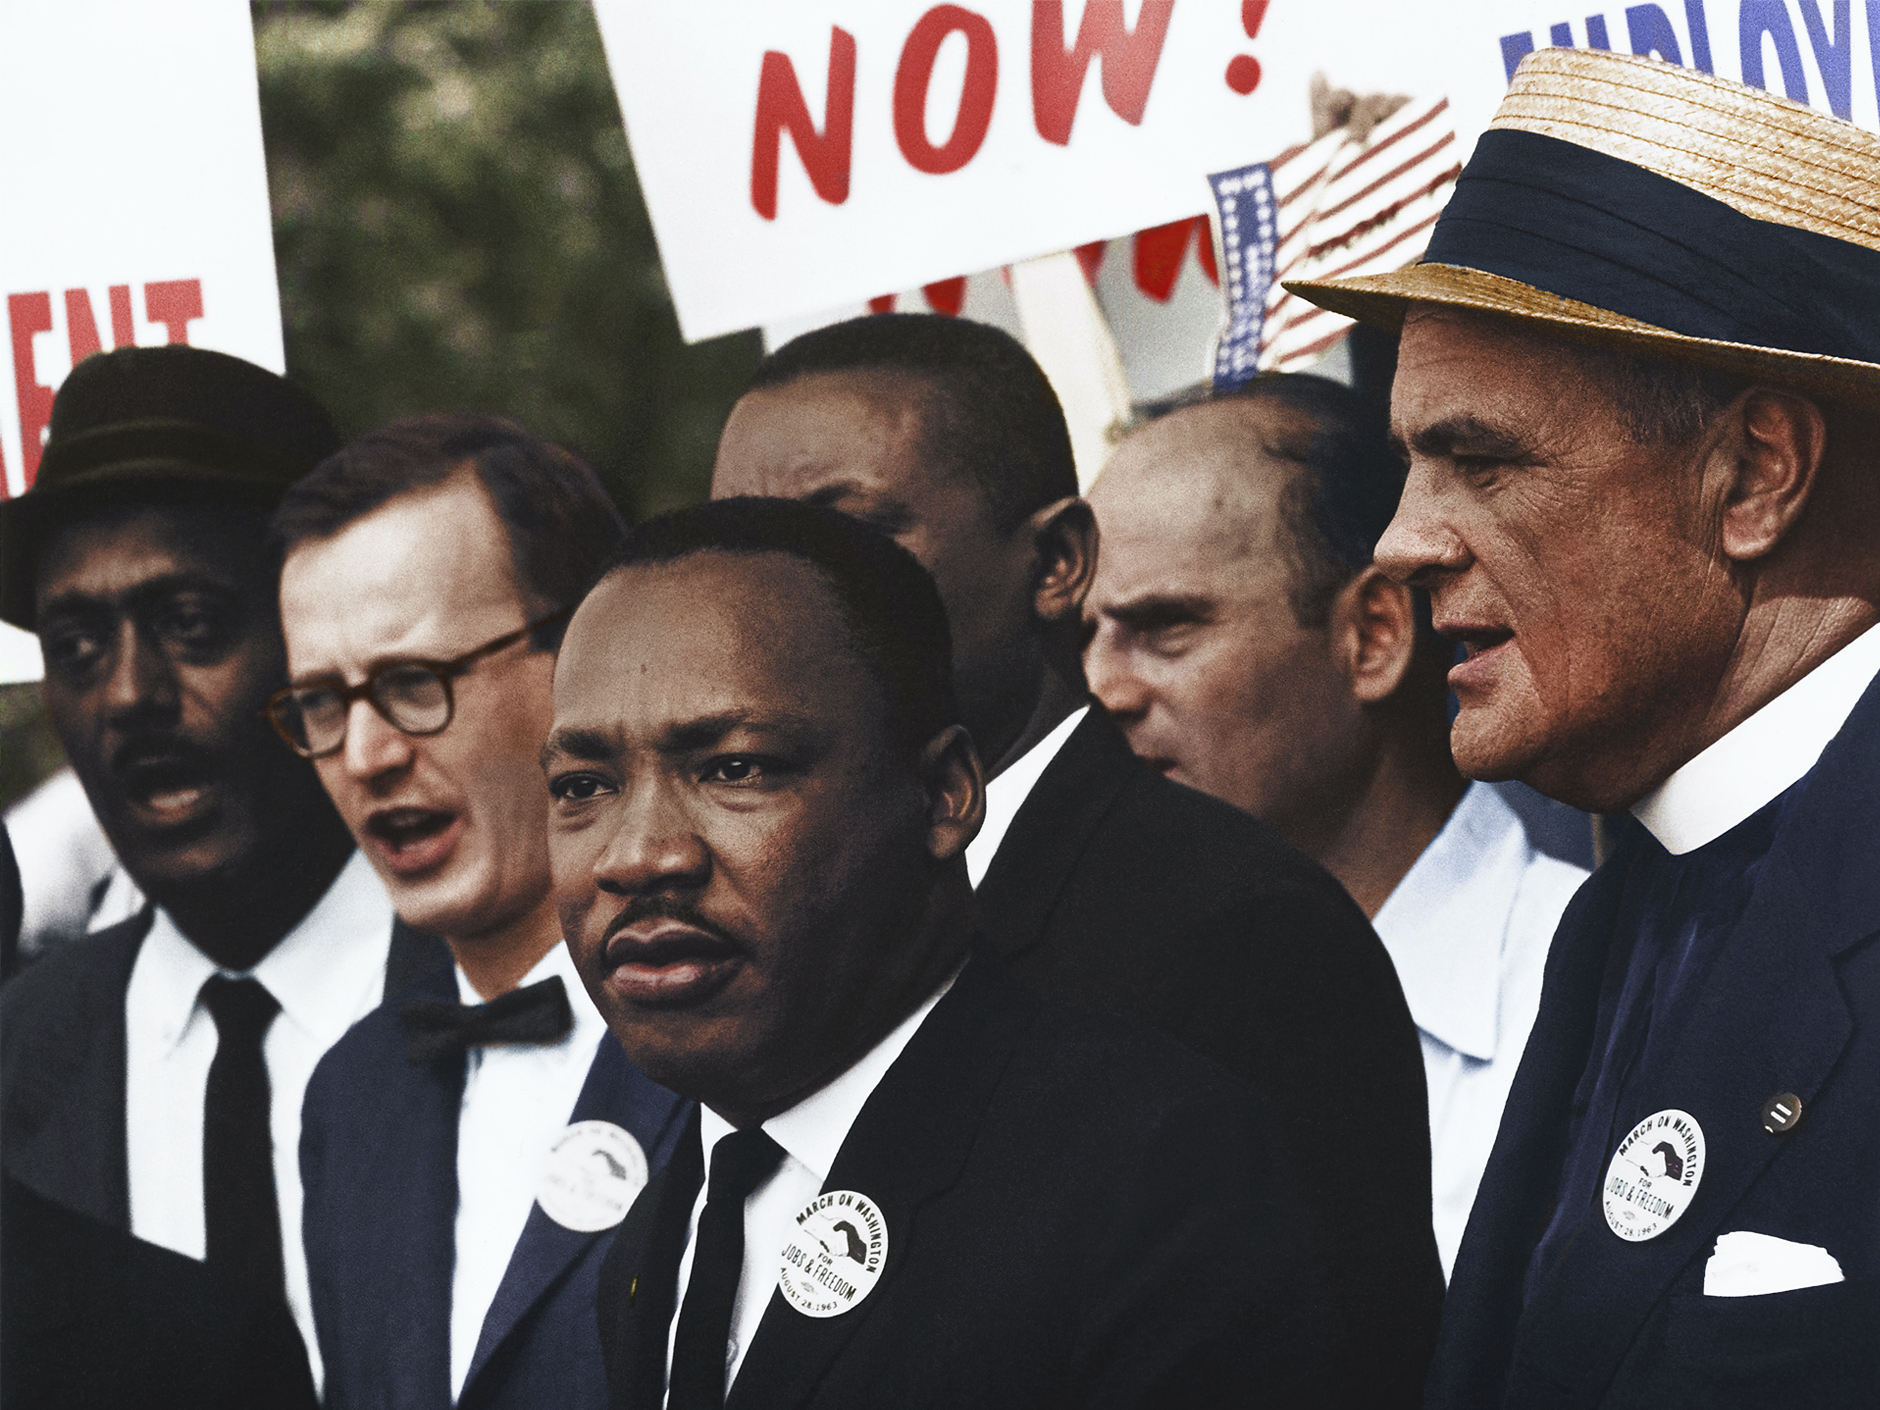 2022 Dr. Martin Luther King Jr. Living Legacy Convocation